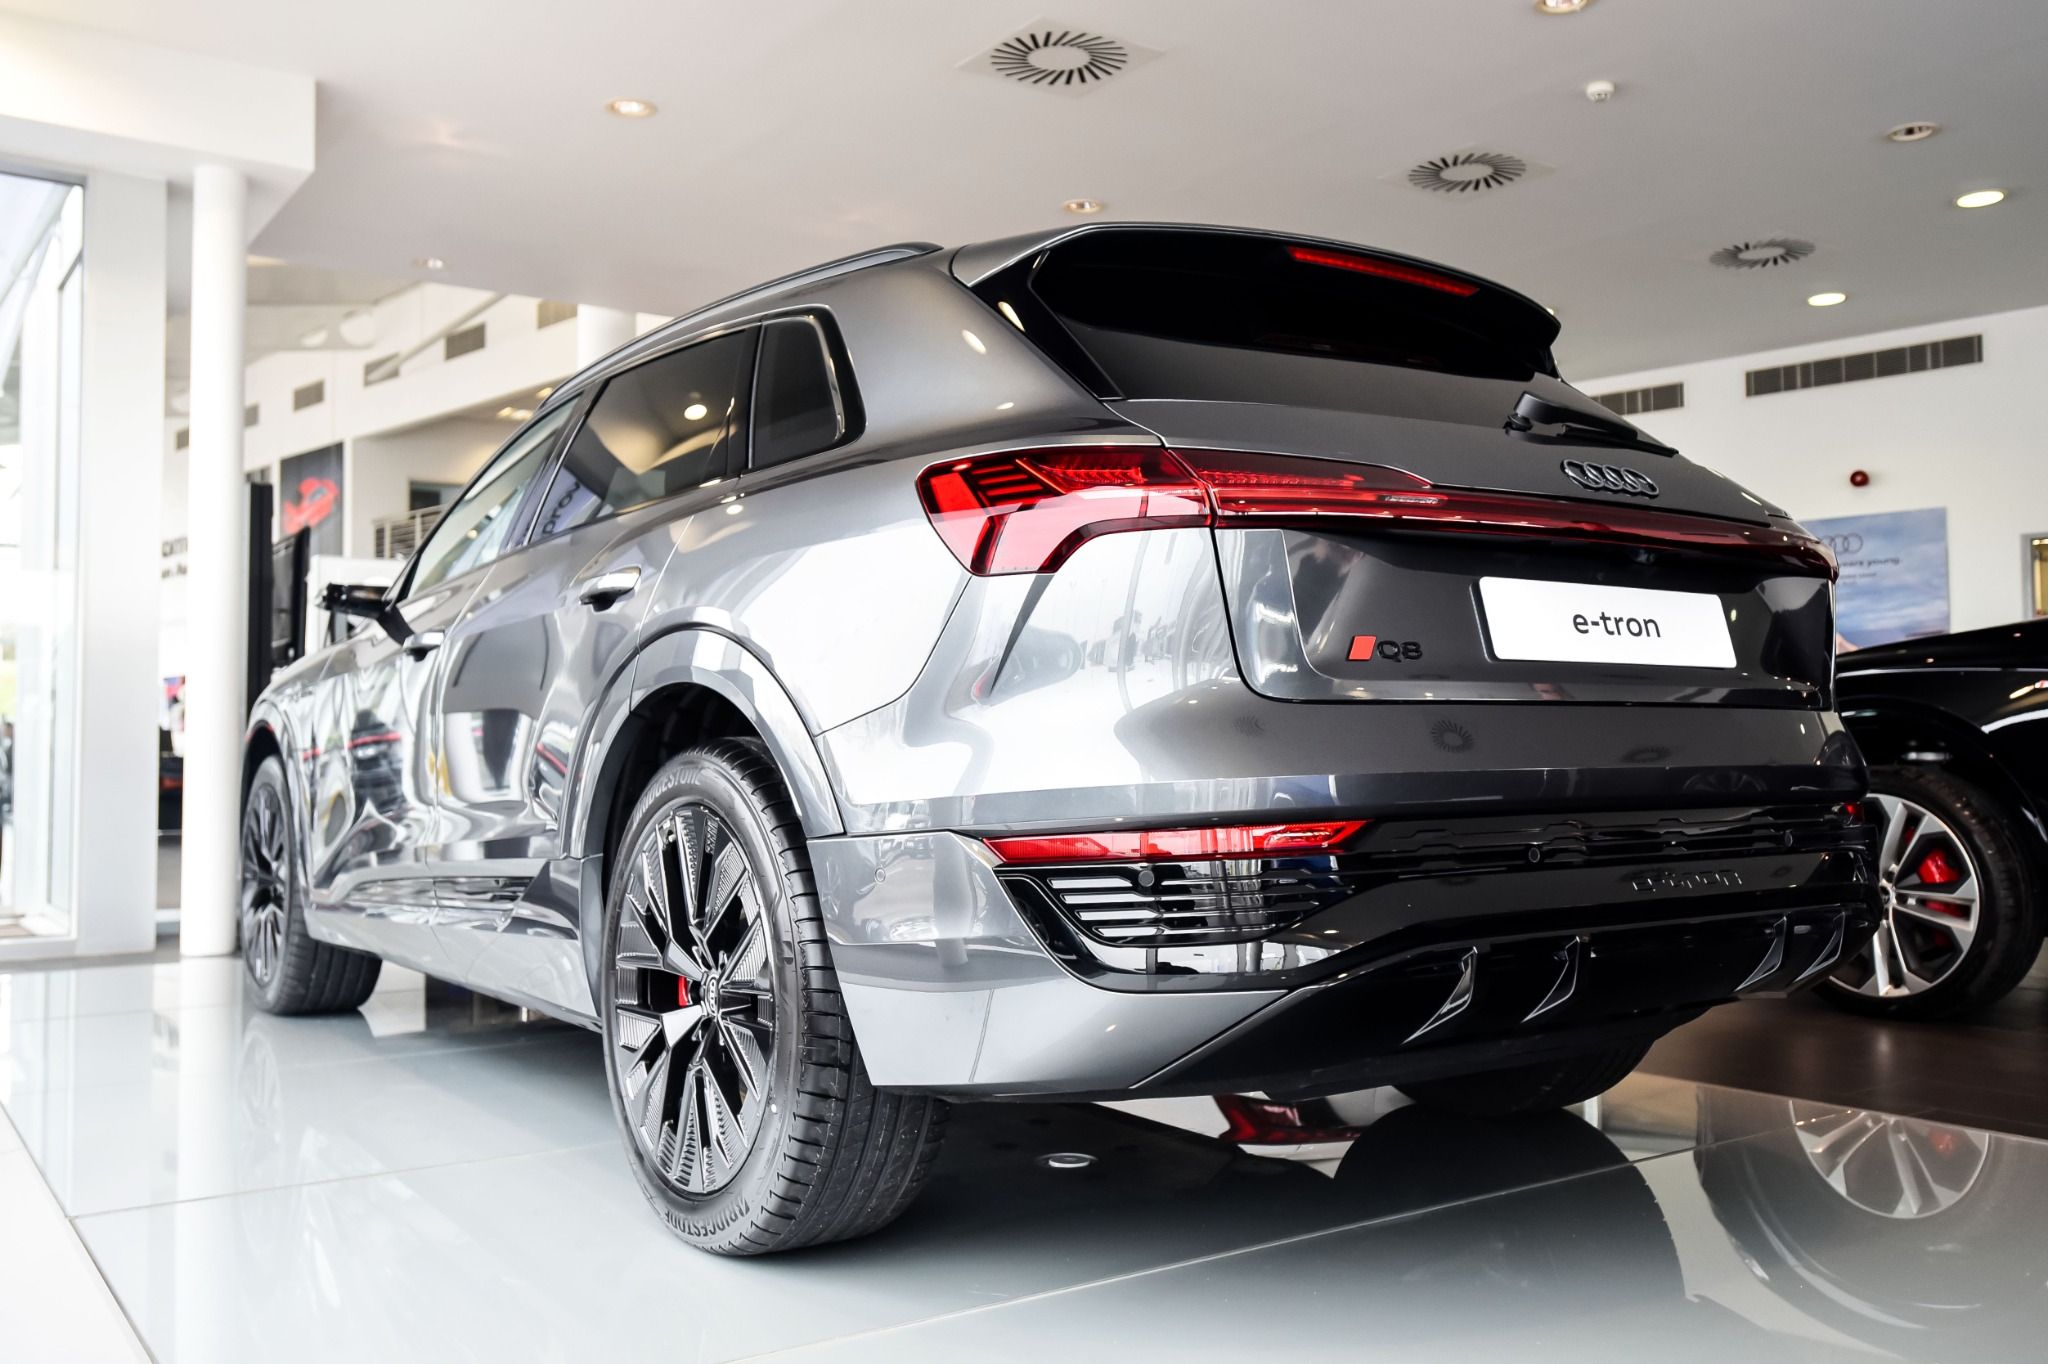 Audi Q8 e-tron in showroom rear view